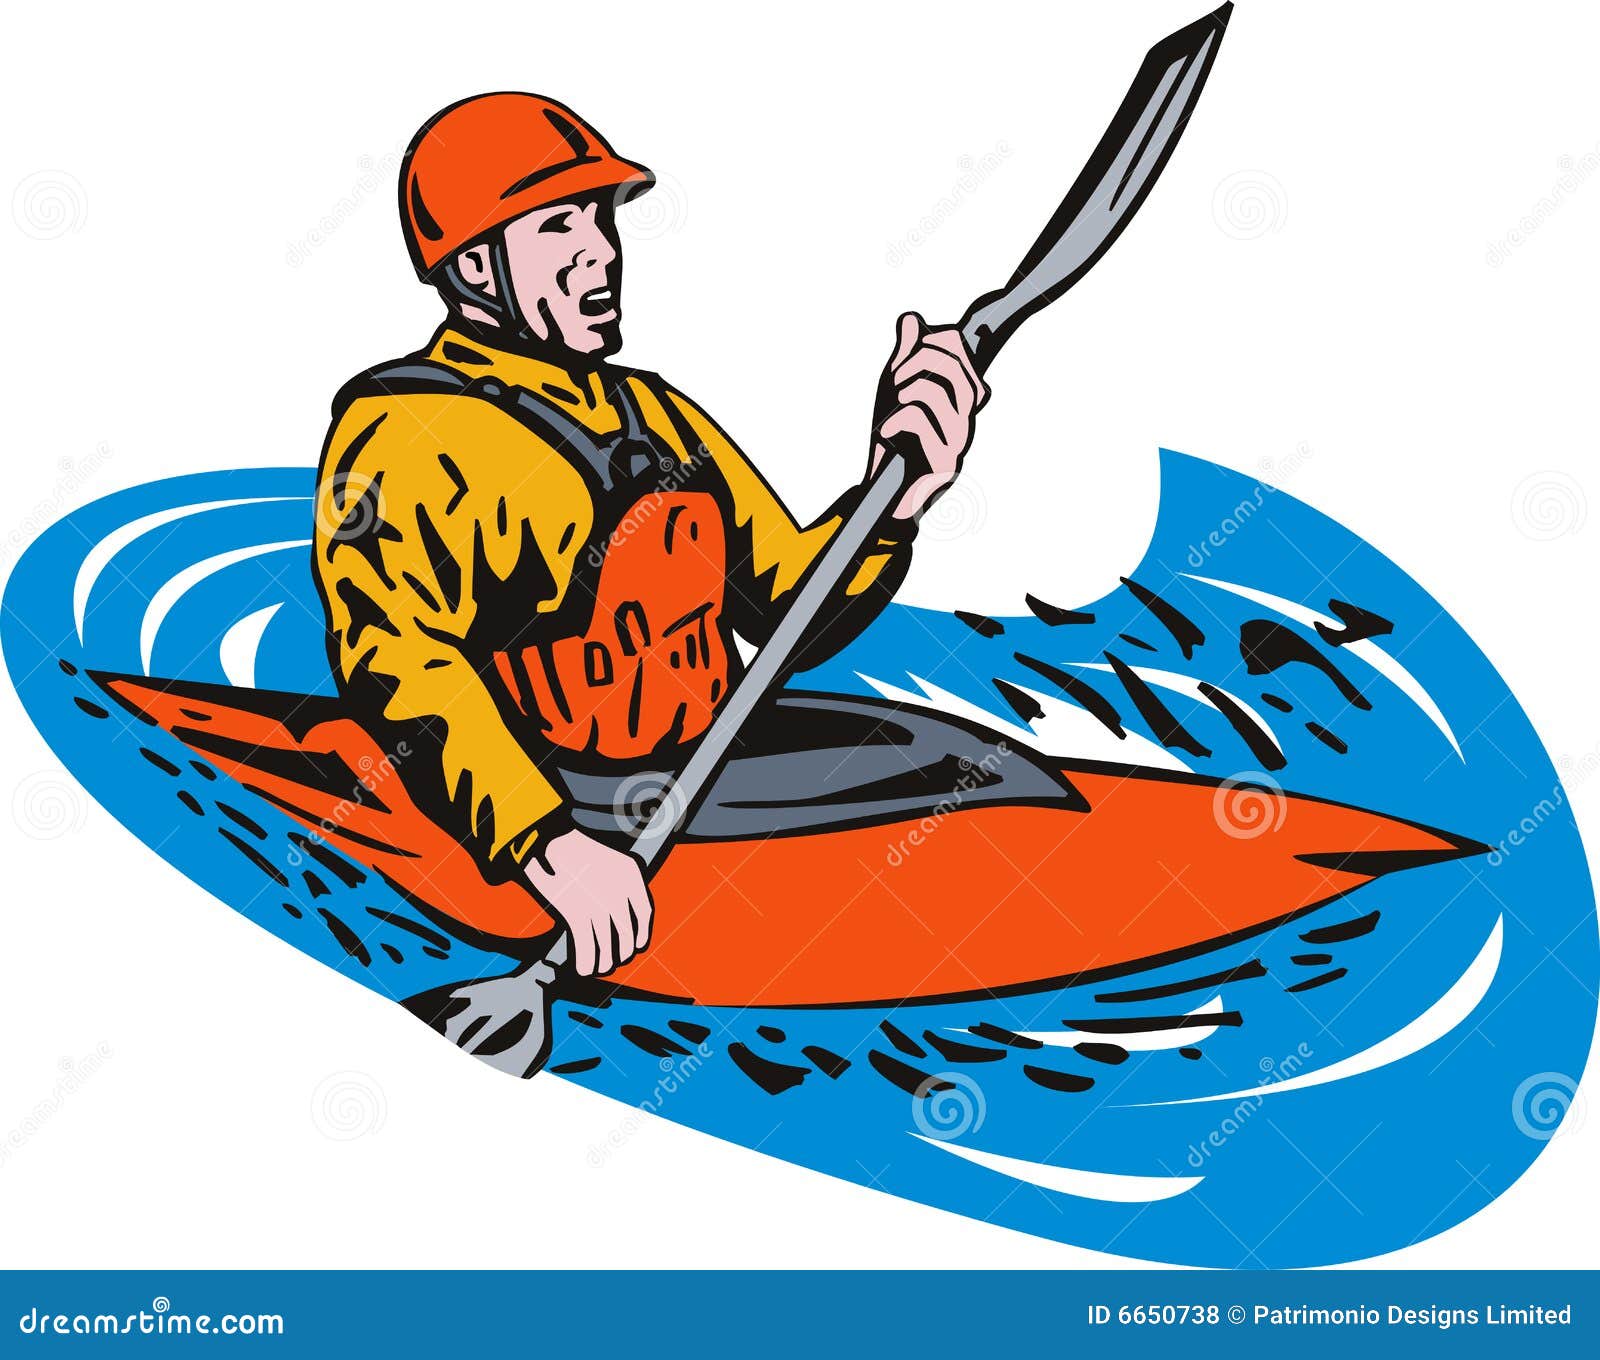 animated kayak clipart - photo #50